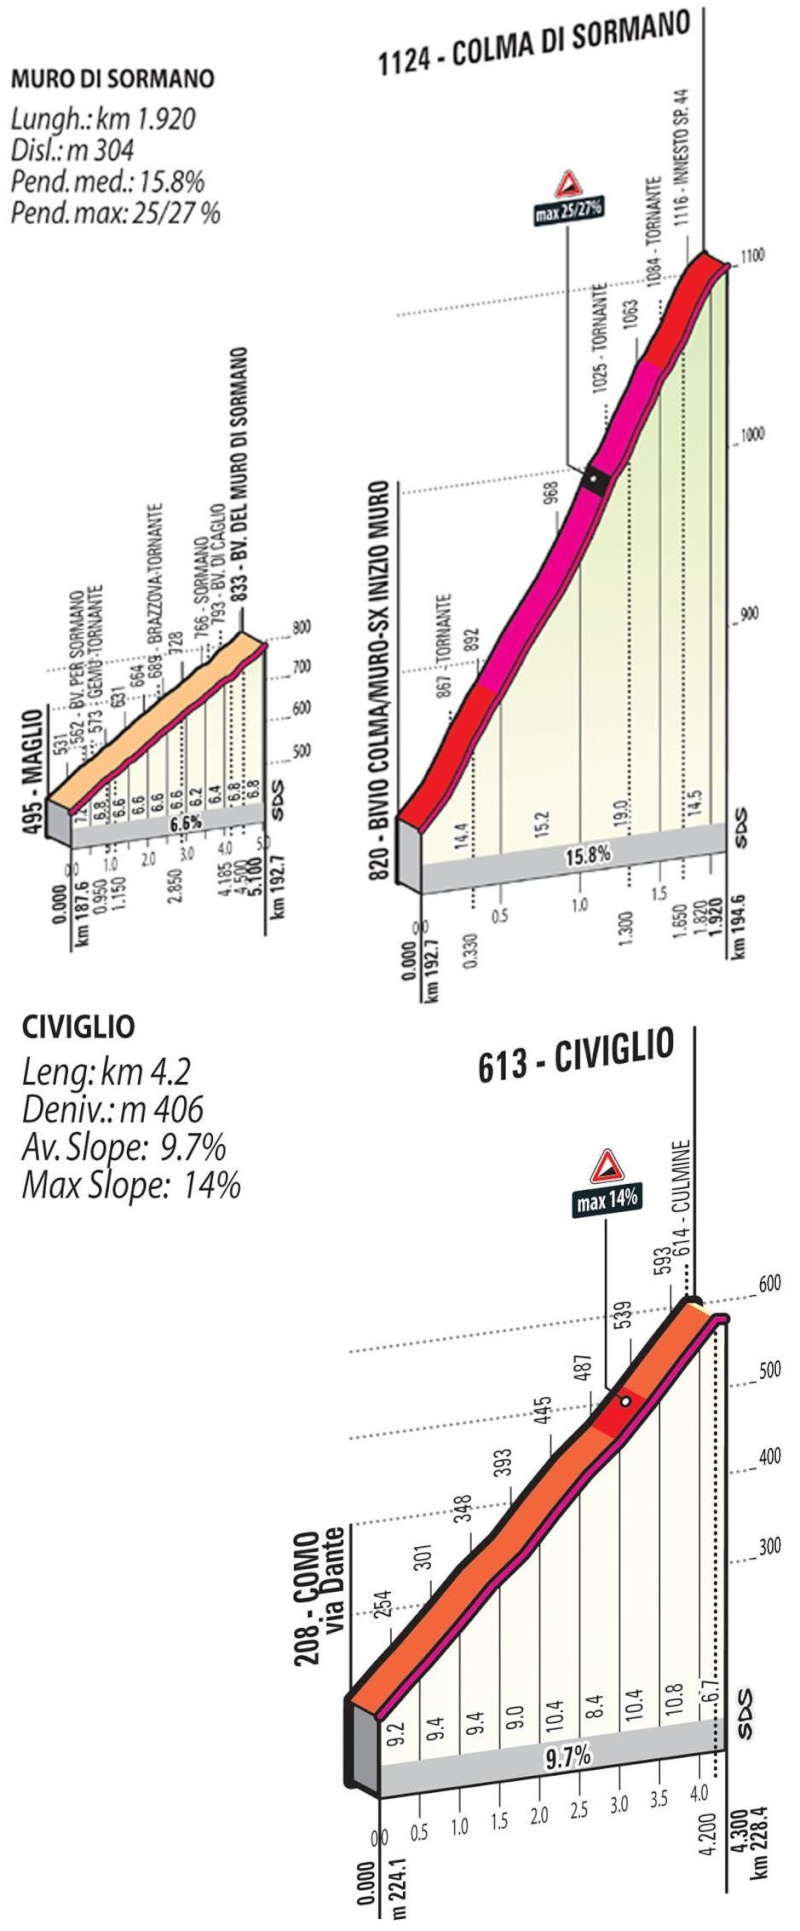 Giro - Il Lombardia (Giro di Lombardia) 2015 - (4 ottobre 2015) - Pagina 5 Sorman10